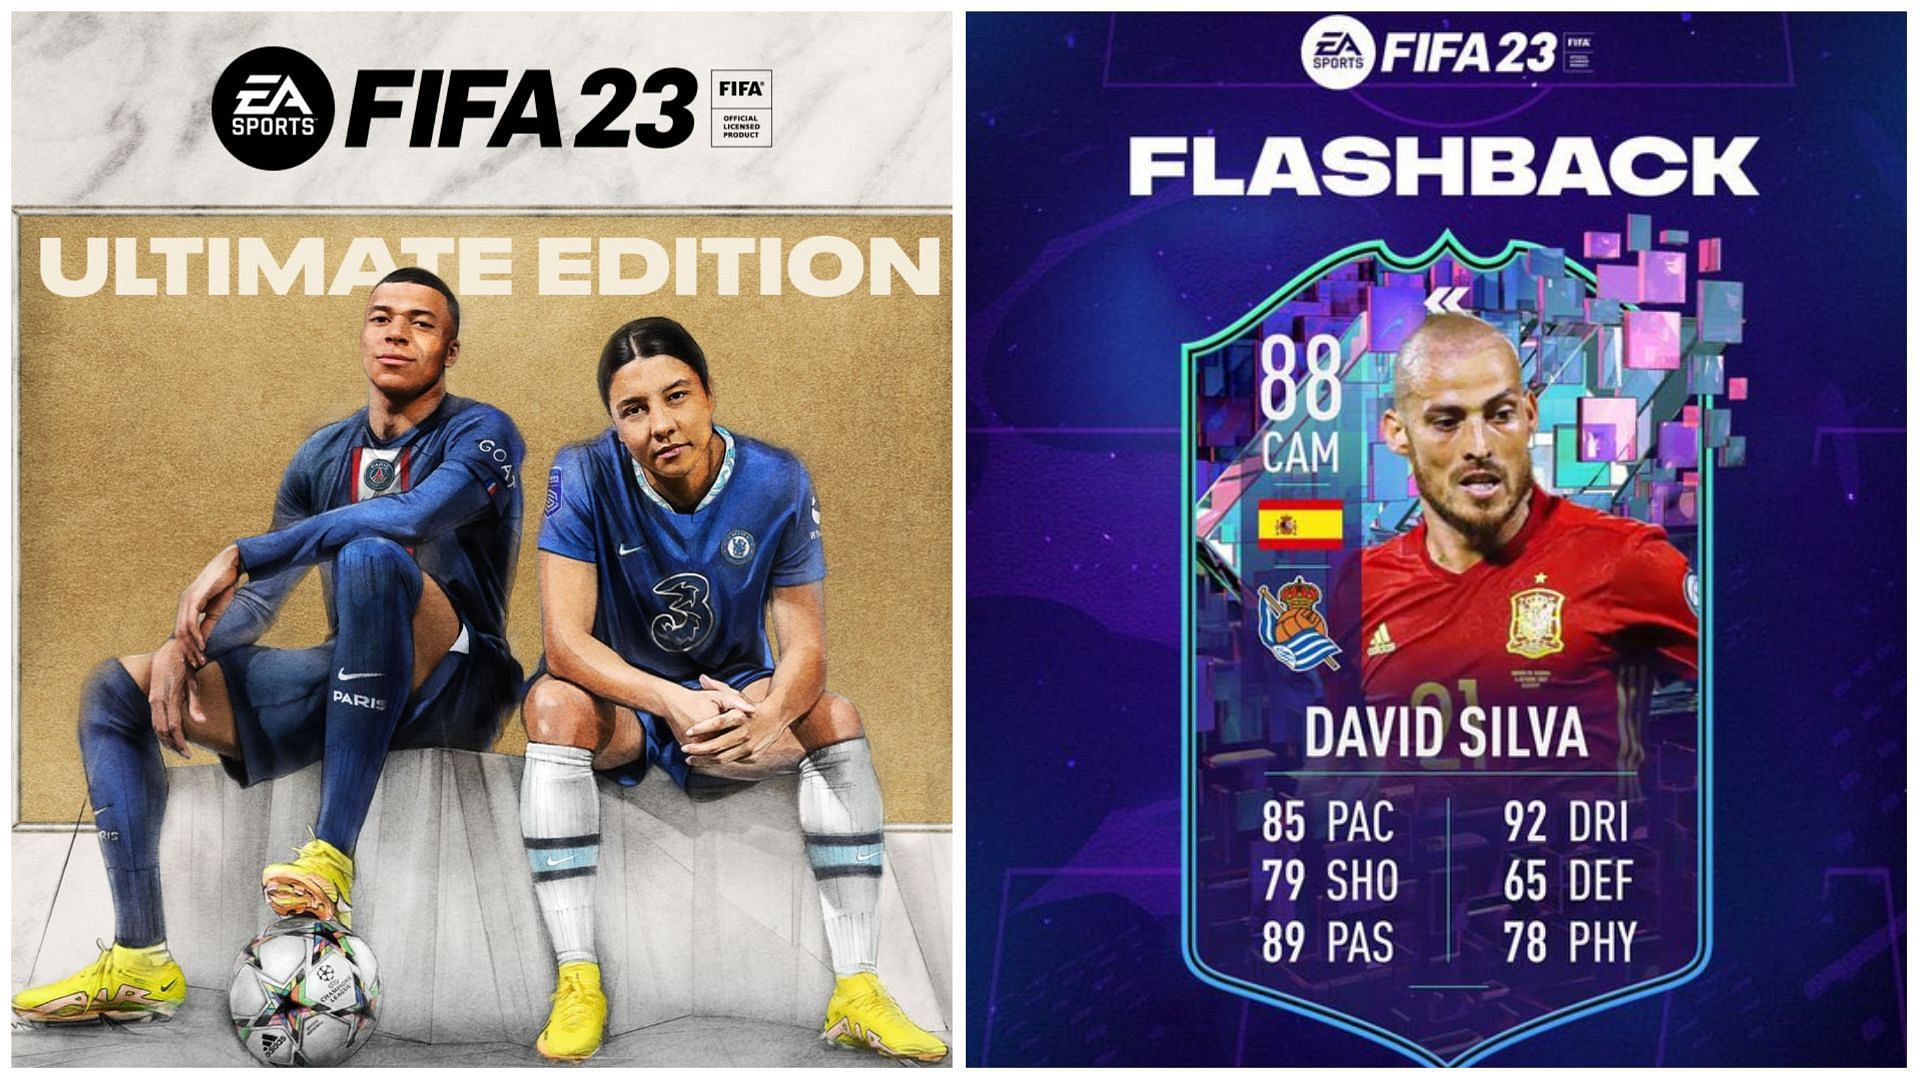 Flashback David Silva has been leaked (Images via EA Sports and Twitter/FUTArcade)